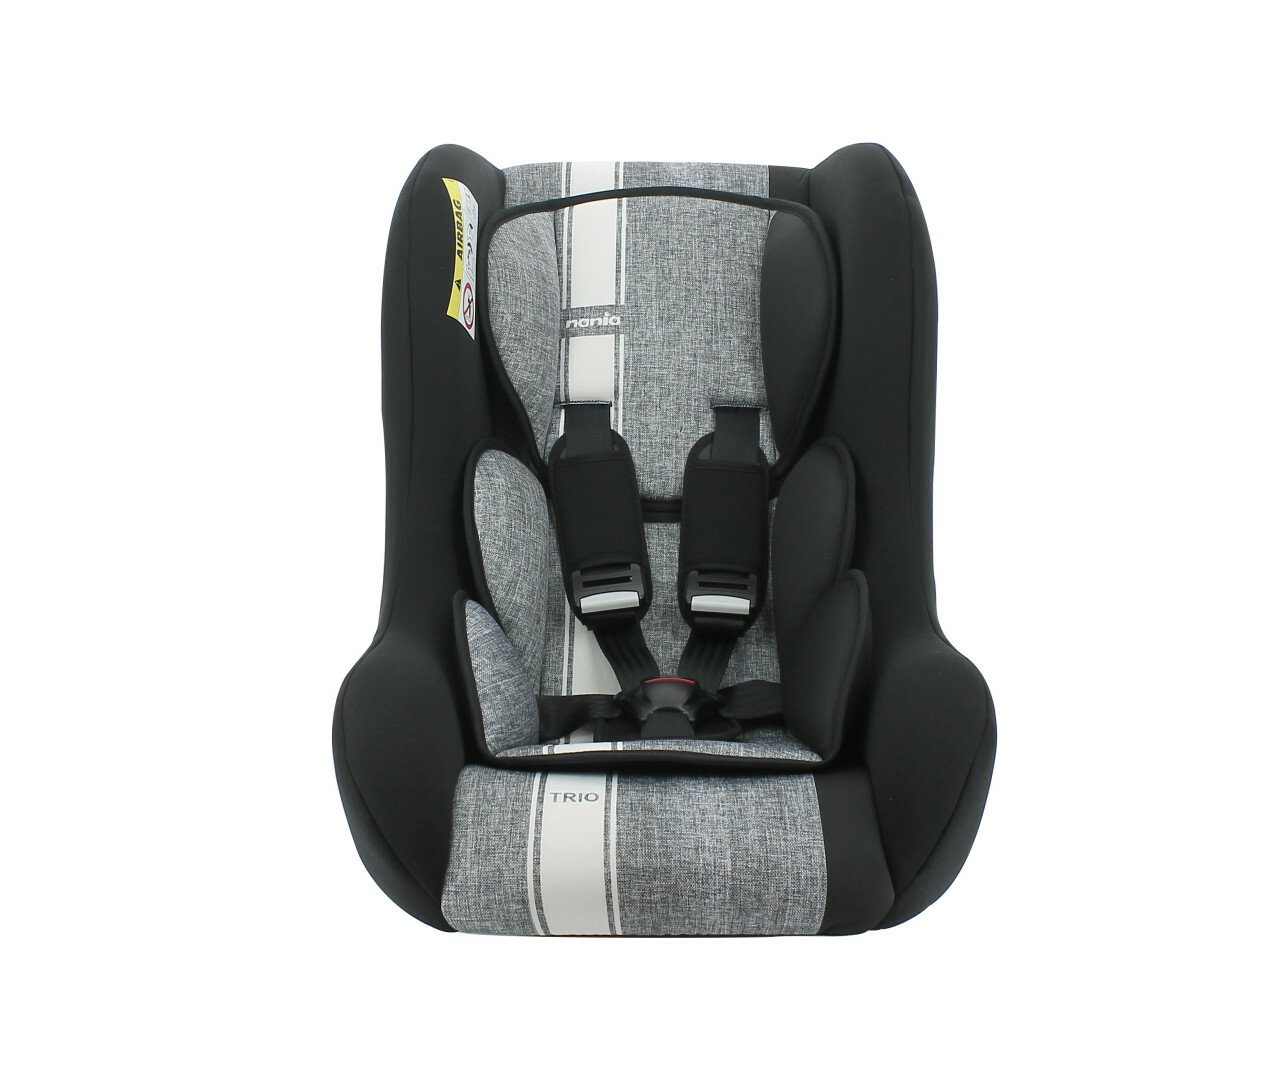 newborn baby car seat argos